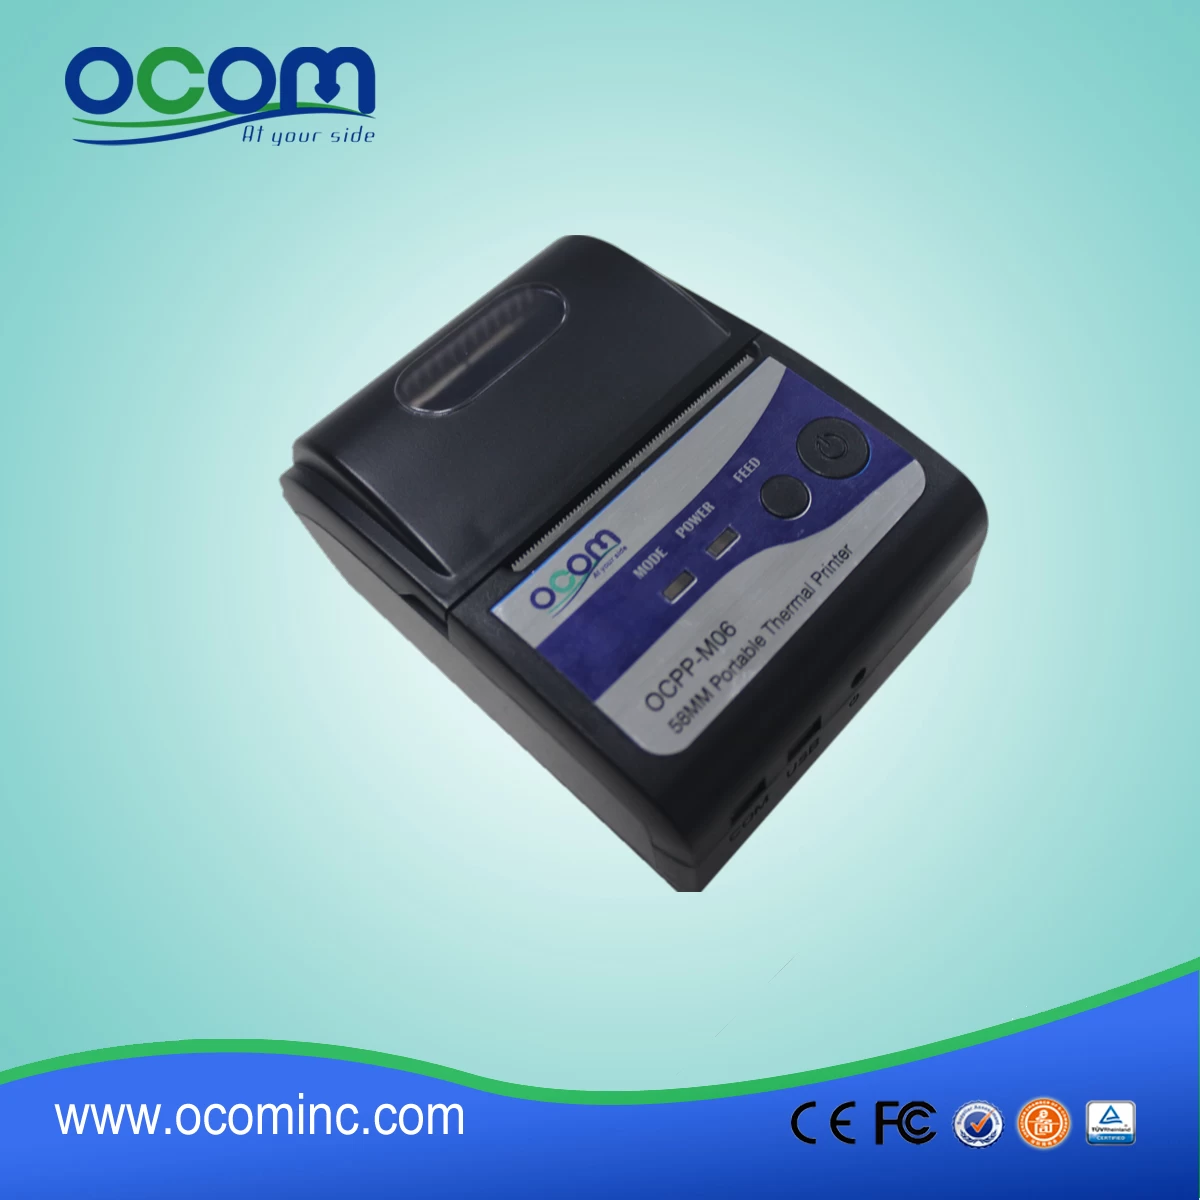 (OCPP-M06) OCOM Hot selling cheap android printer bluetooth pos